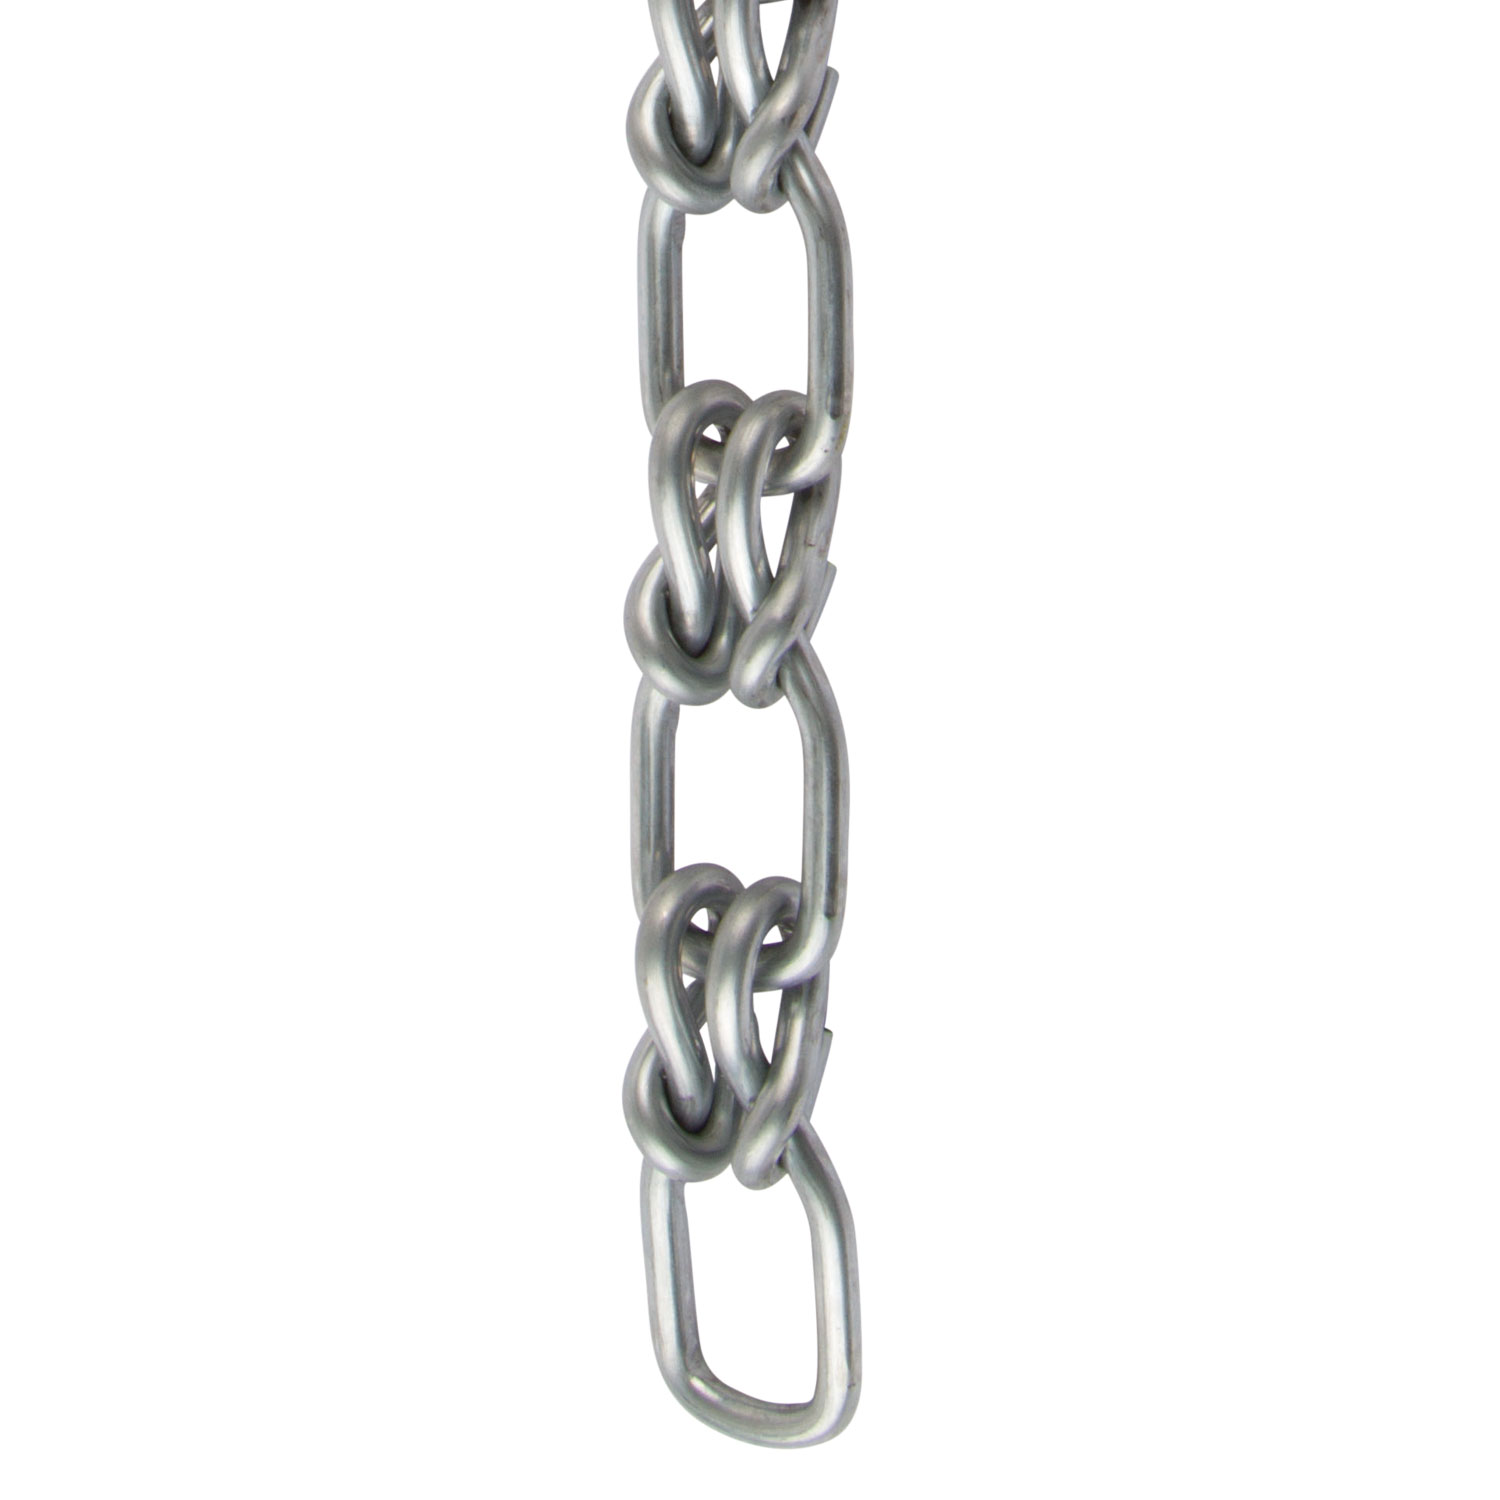 ASC MC12740305 Low Carbon Steel Lock Link Single Loop Chain Zinc Plated 4/0 Trade 5/32 Diameter x 50 Length 485 lbs Working Load Limit 